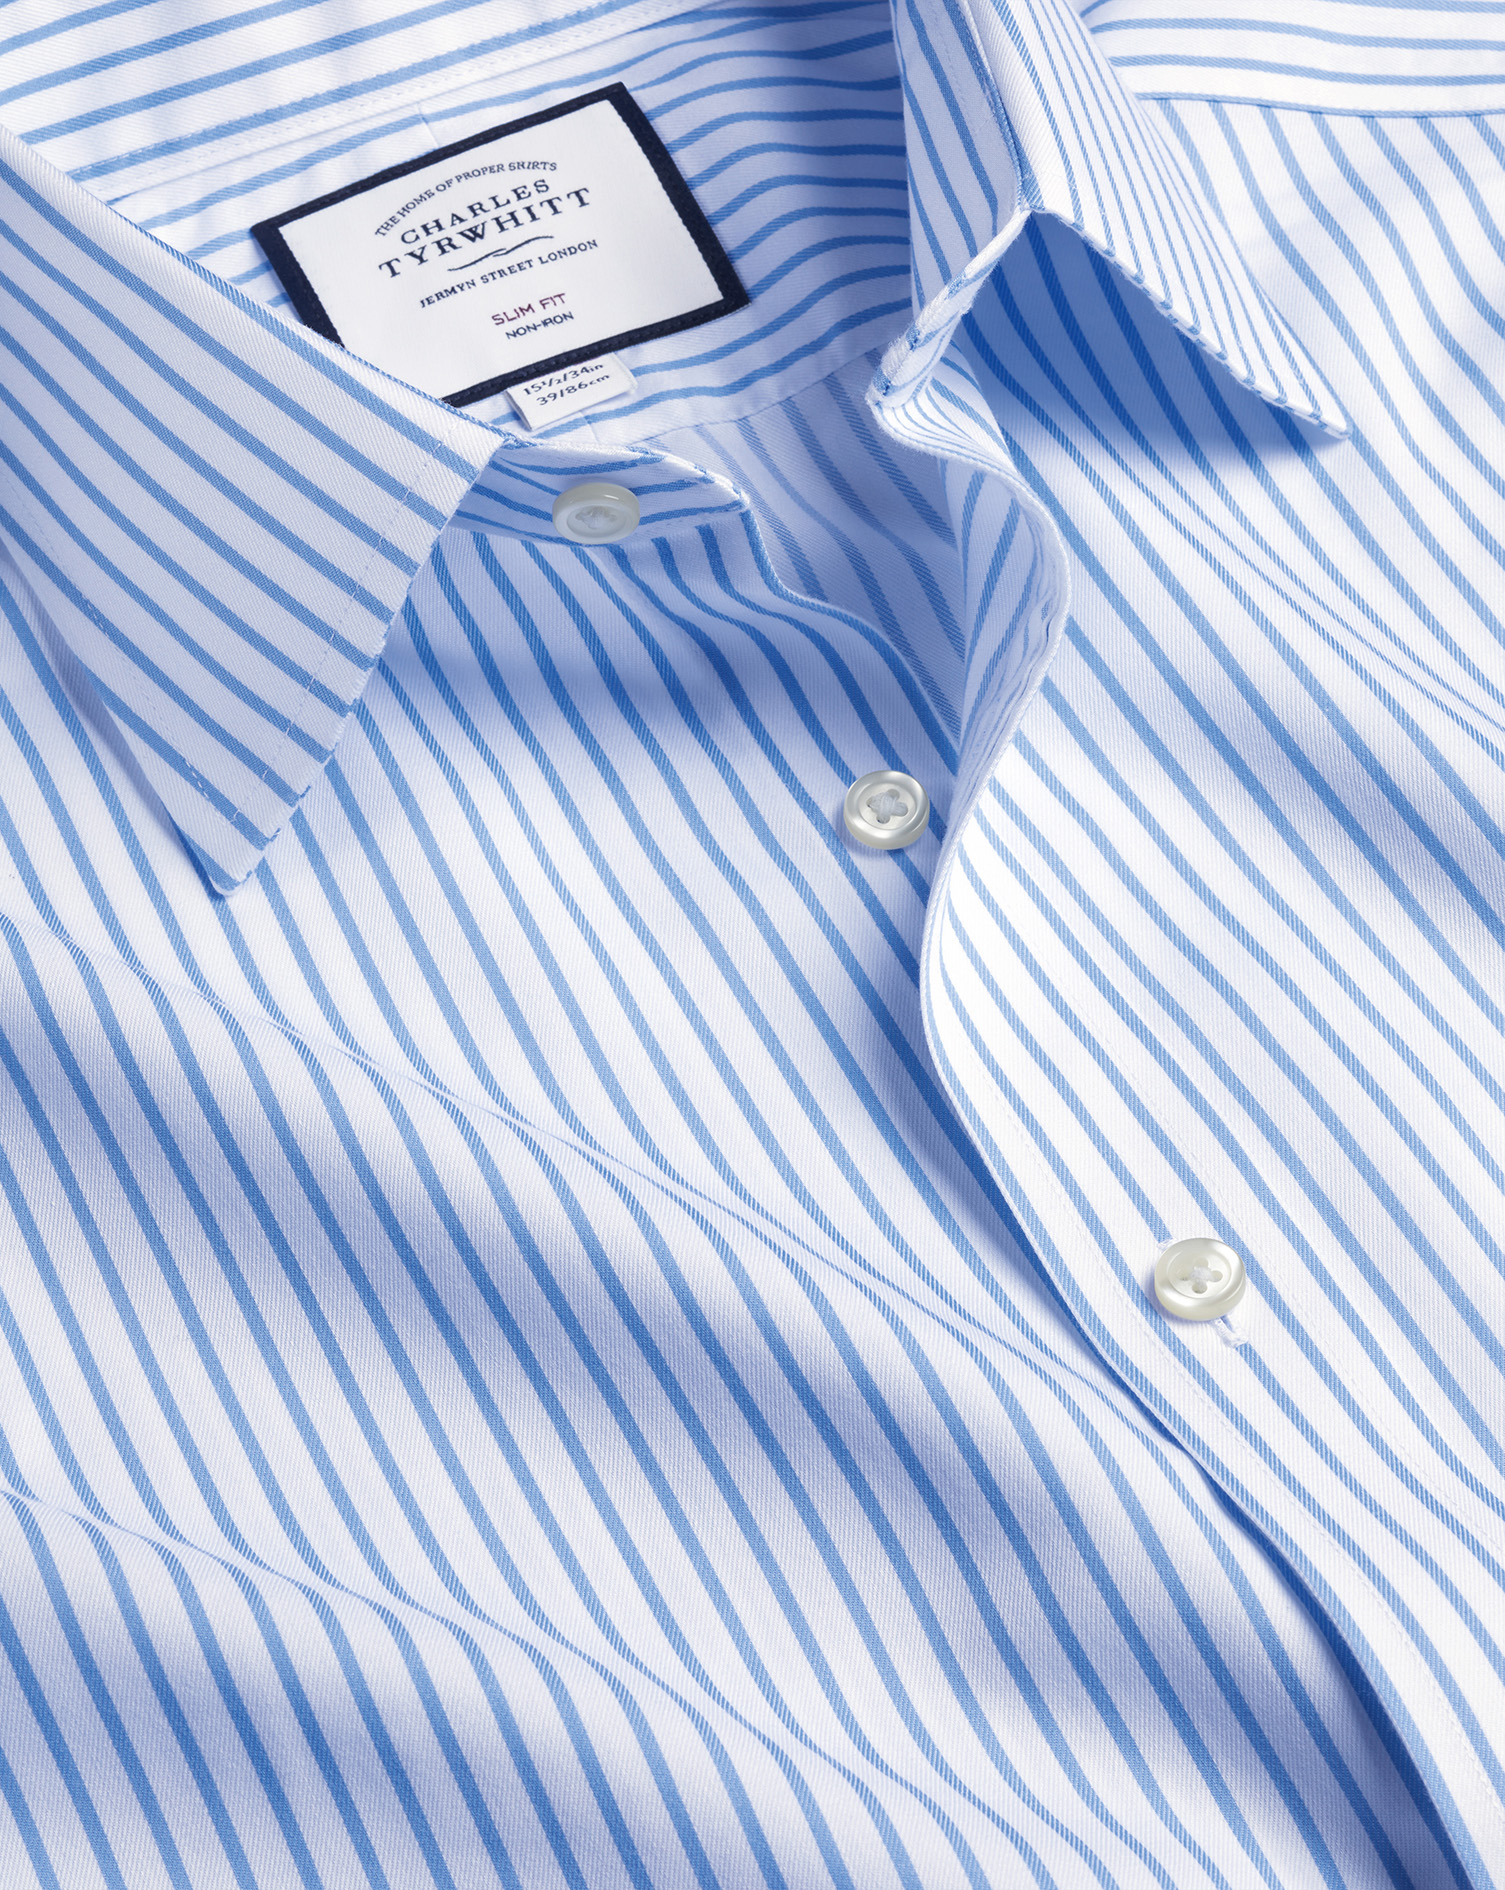 Men's Charles Tyrwhitt Non-Iron Twill Stripe Dress Shirt - Cornflower Blue French Cuff Size Medium C